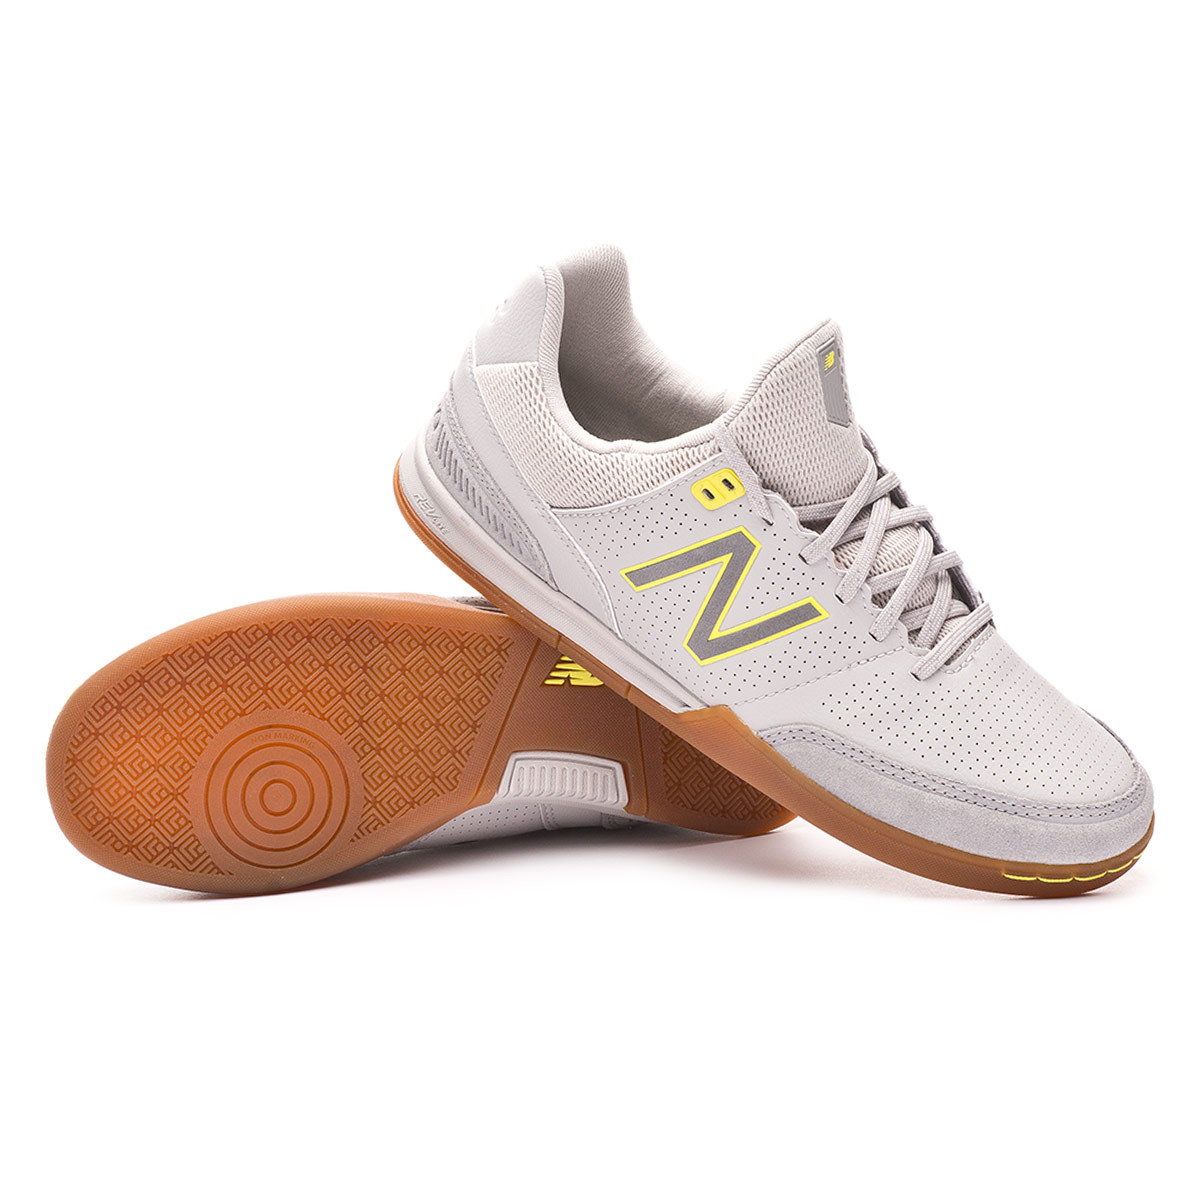 New Balance Audazo V4 Pro Sala Futsal Shoes لاب توب هواوي ميت بوك